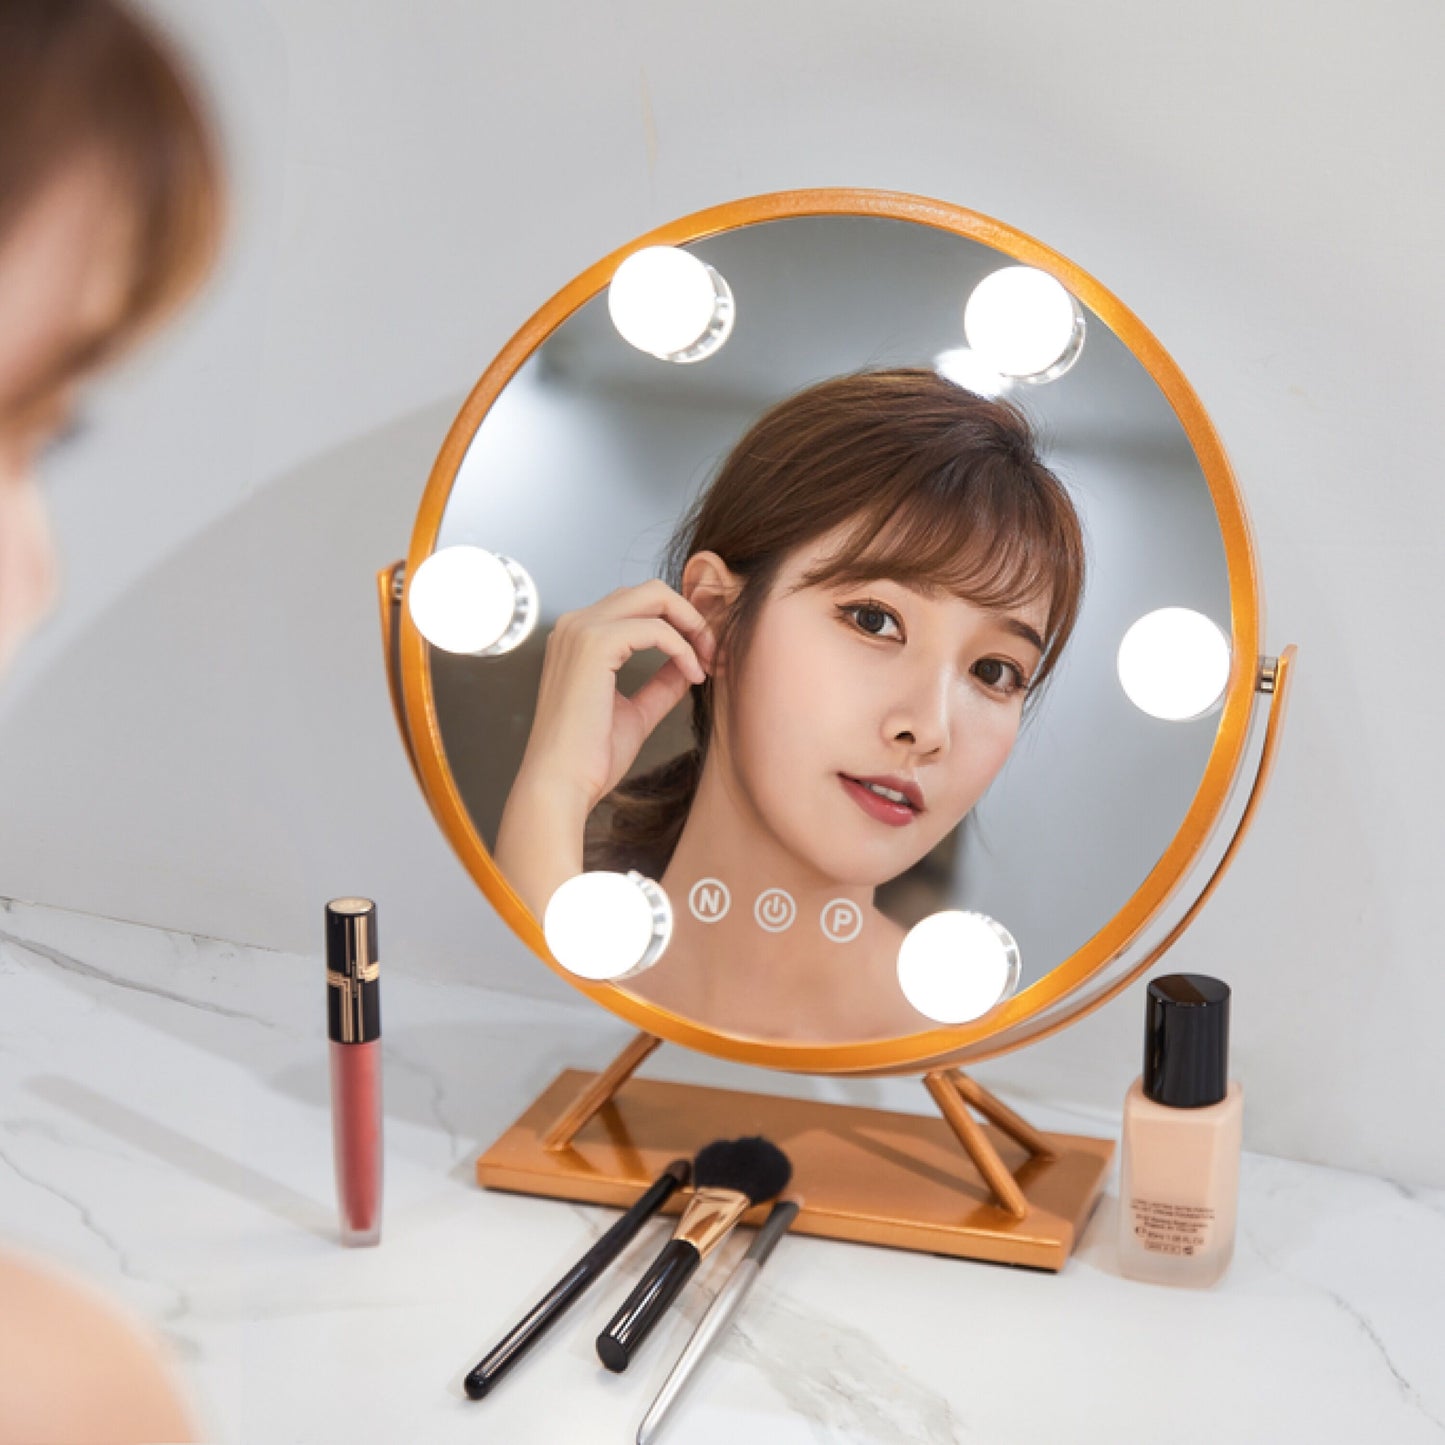 Elegant Vanity Makeup Mirror - Illuminate Your Beauty